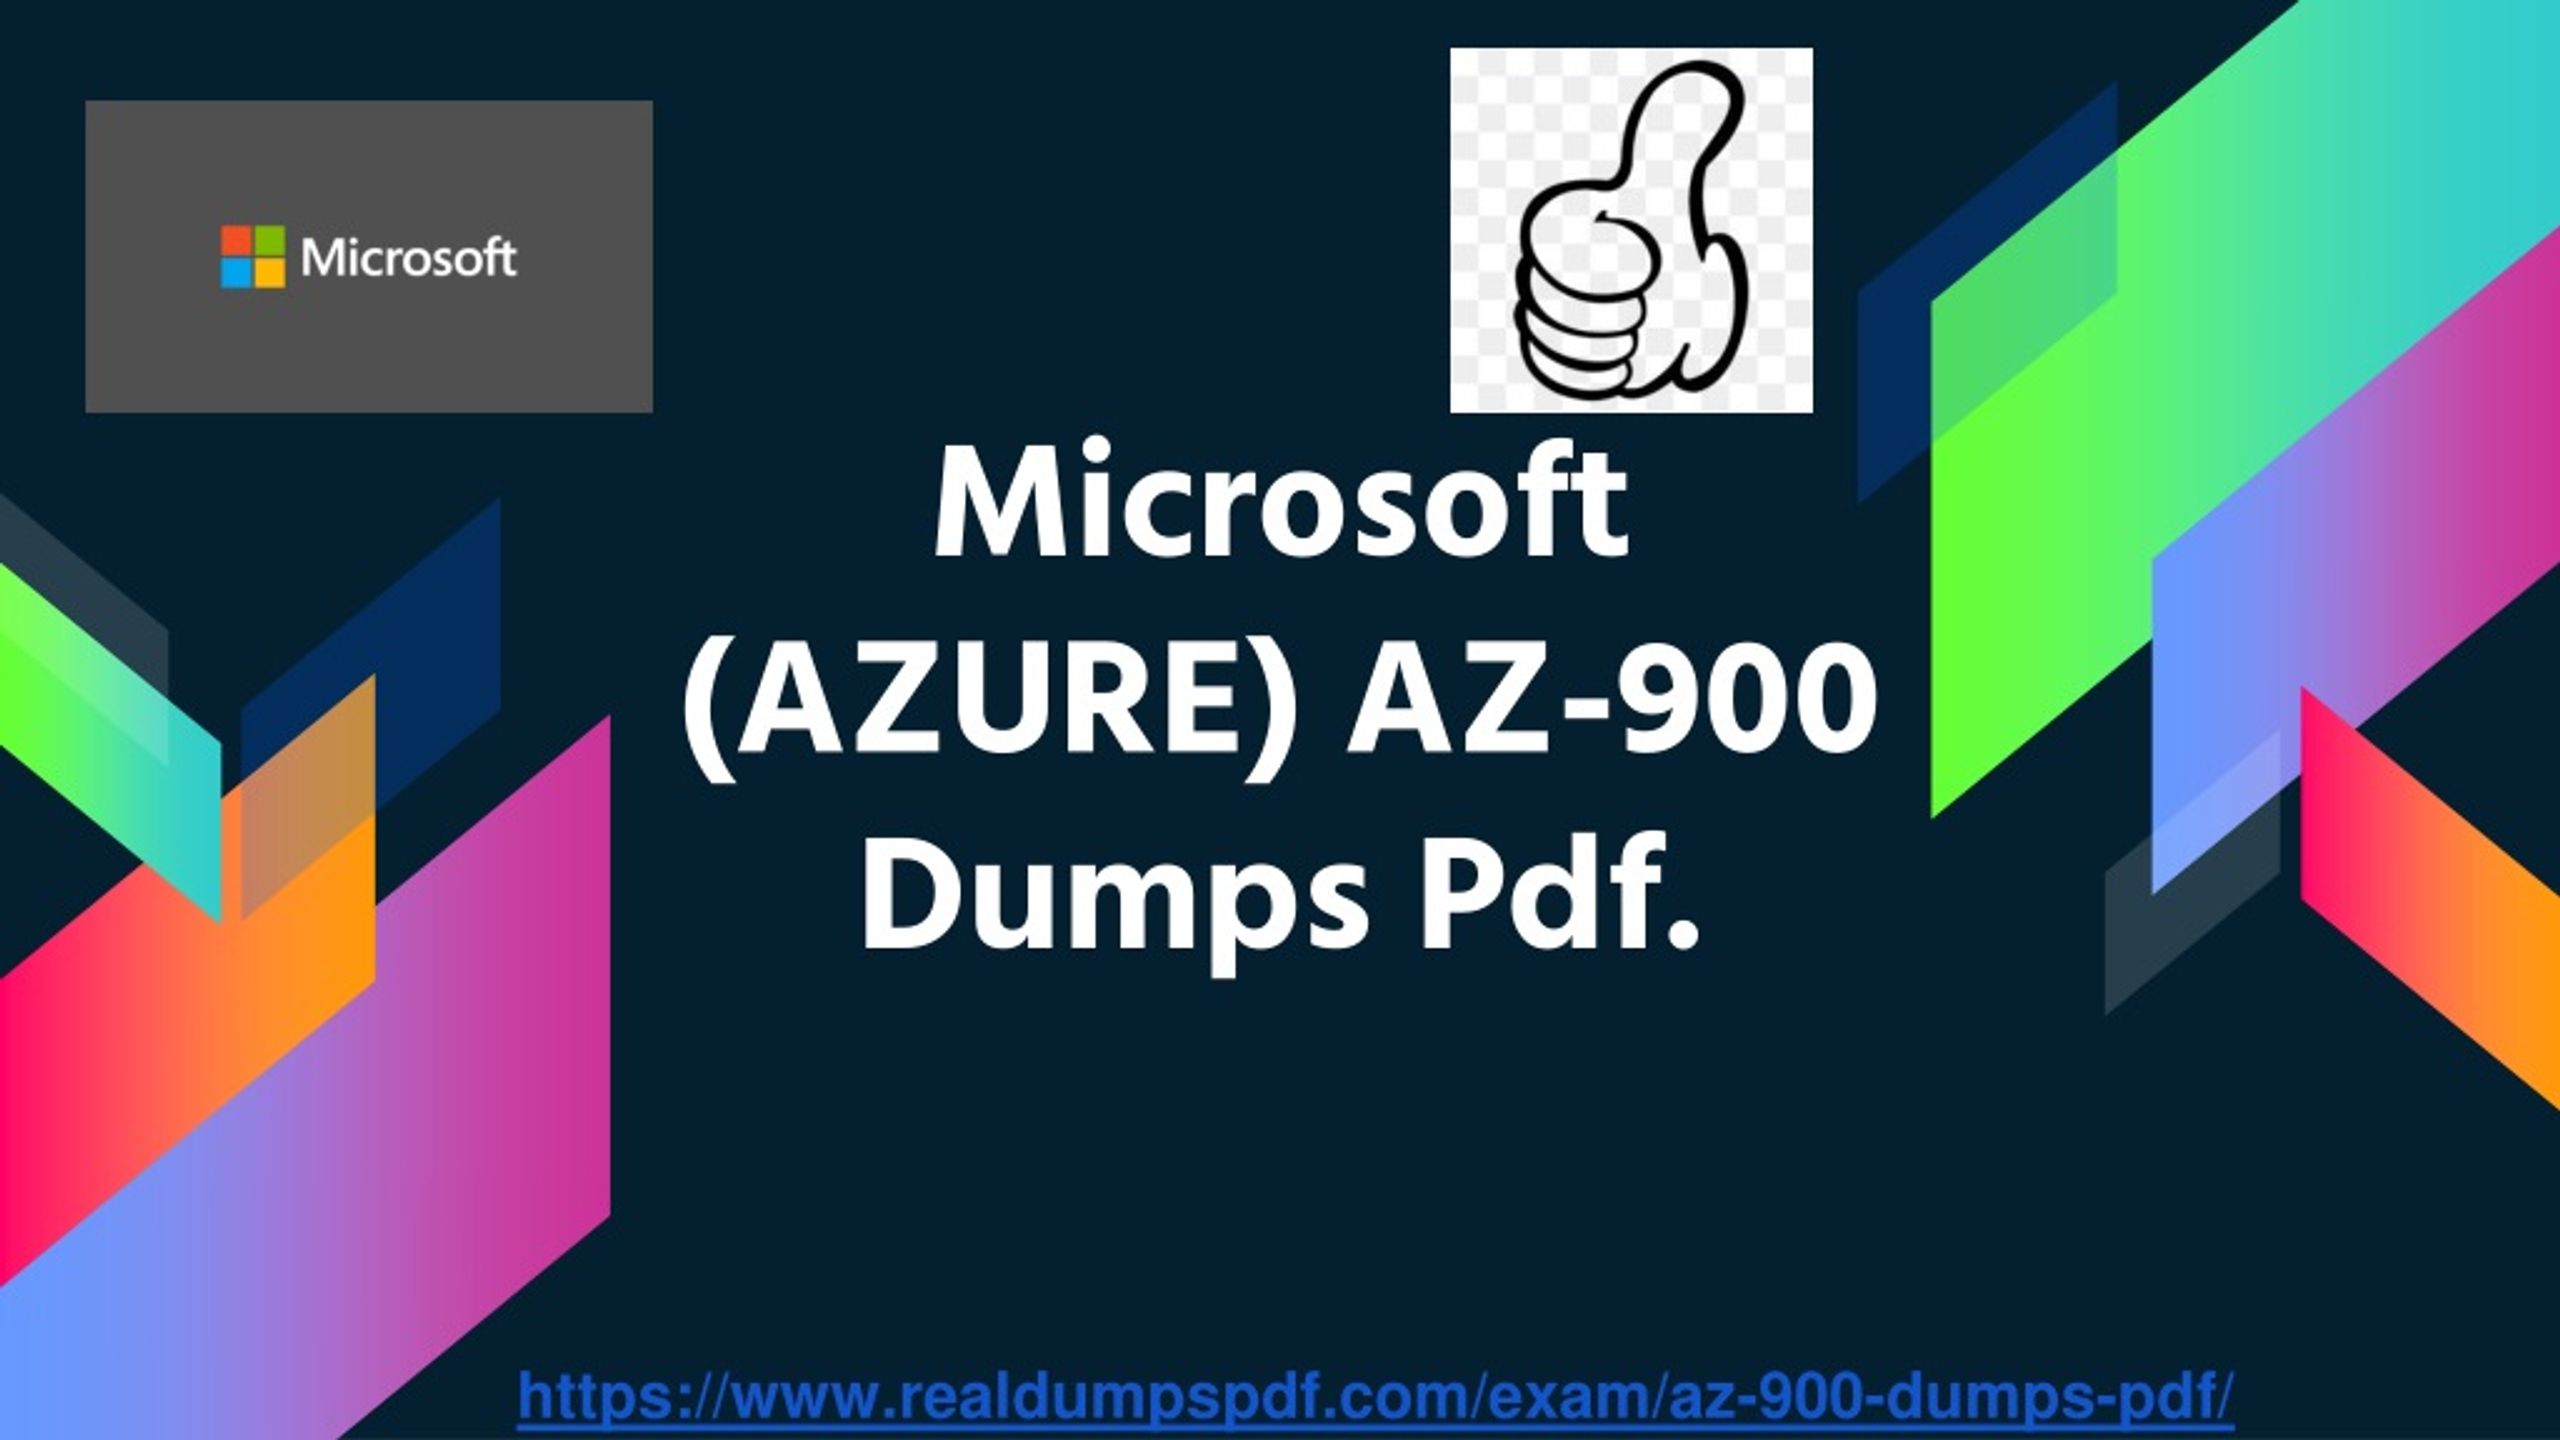 PPT Microsoft (AZURE) AZ900 Dumps Pdf A Successive Way To Get High